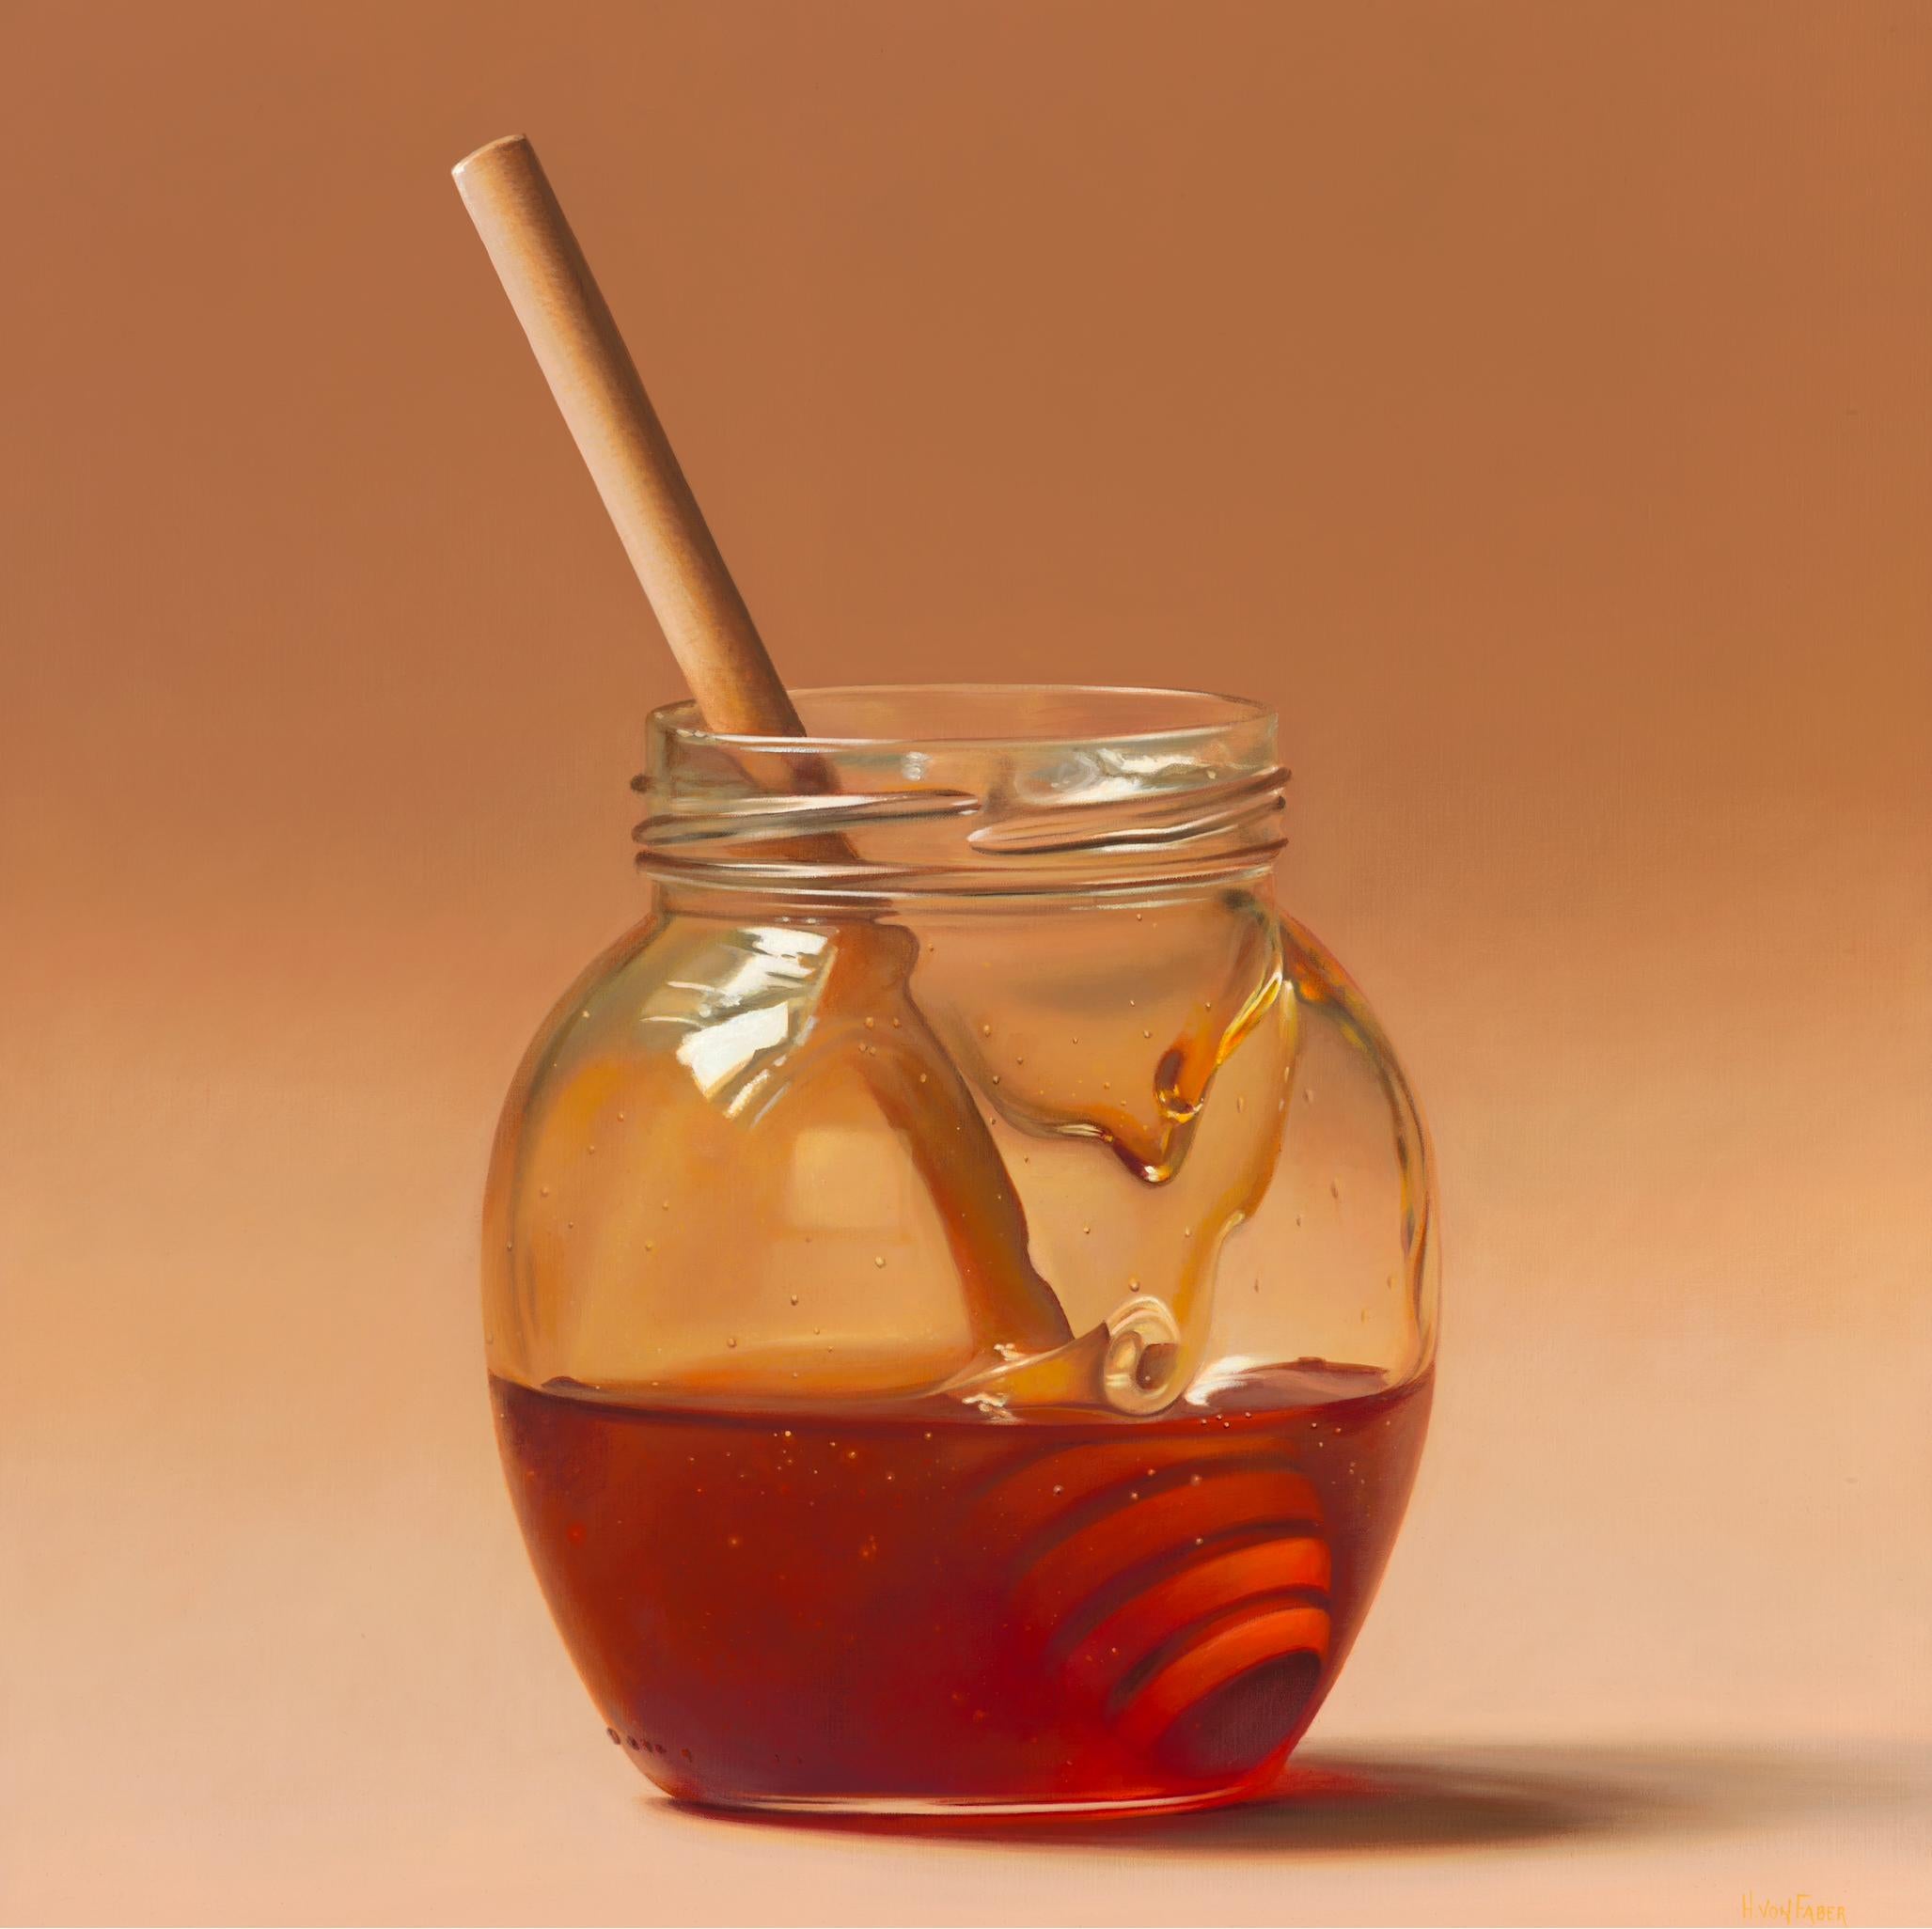 Heidi von Faber Still-Life Painting - Honey spoon in Jar- 21st Century Hyper Realistic Still-life Painting